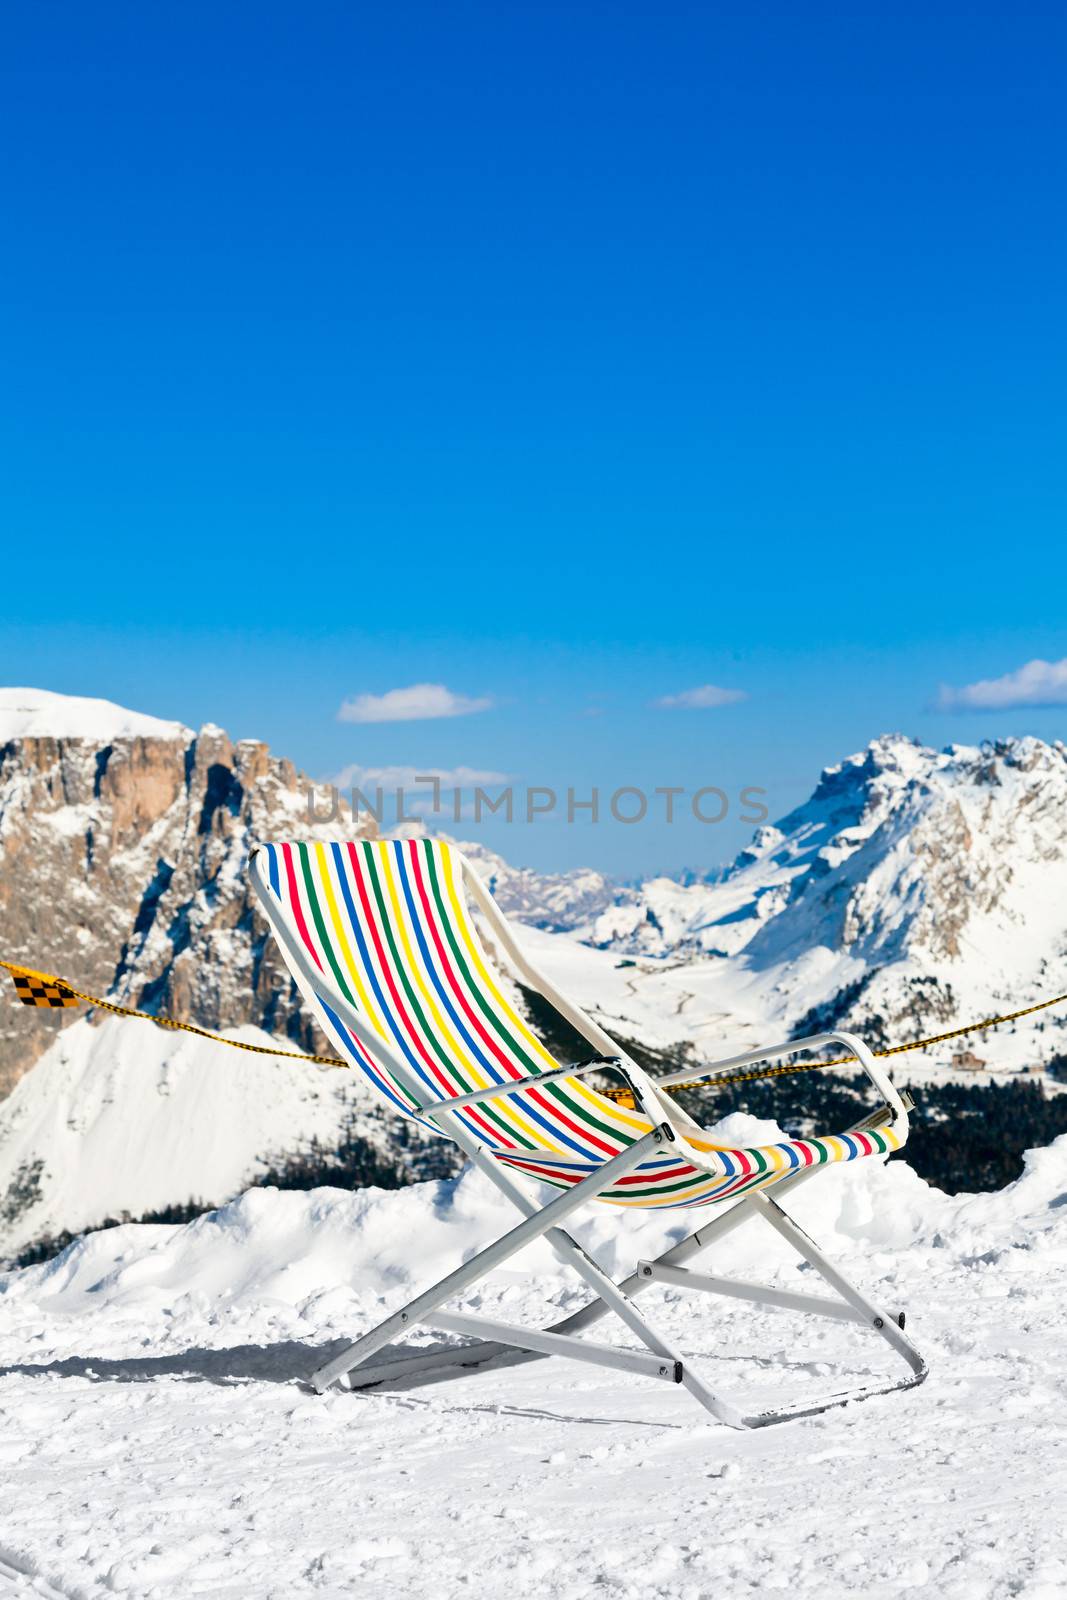 Ski lounge by naumoid